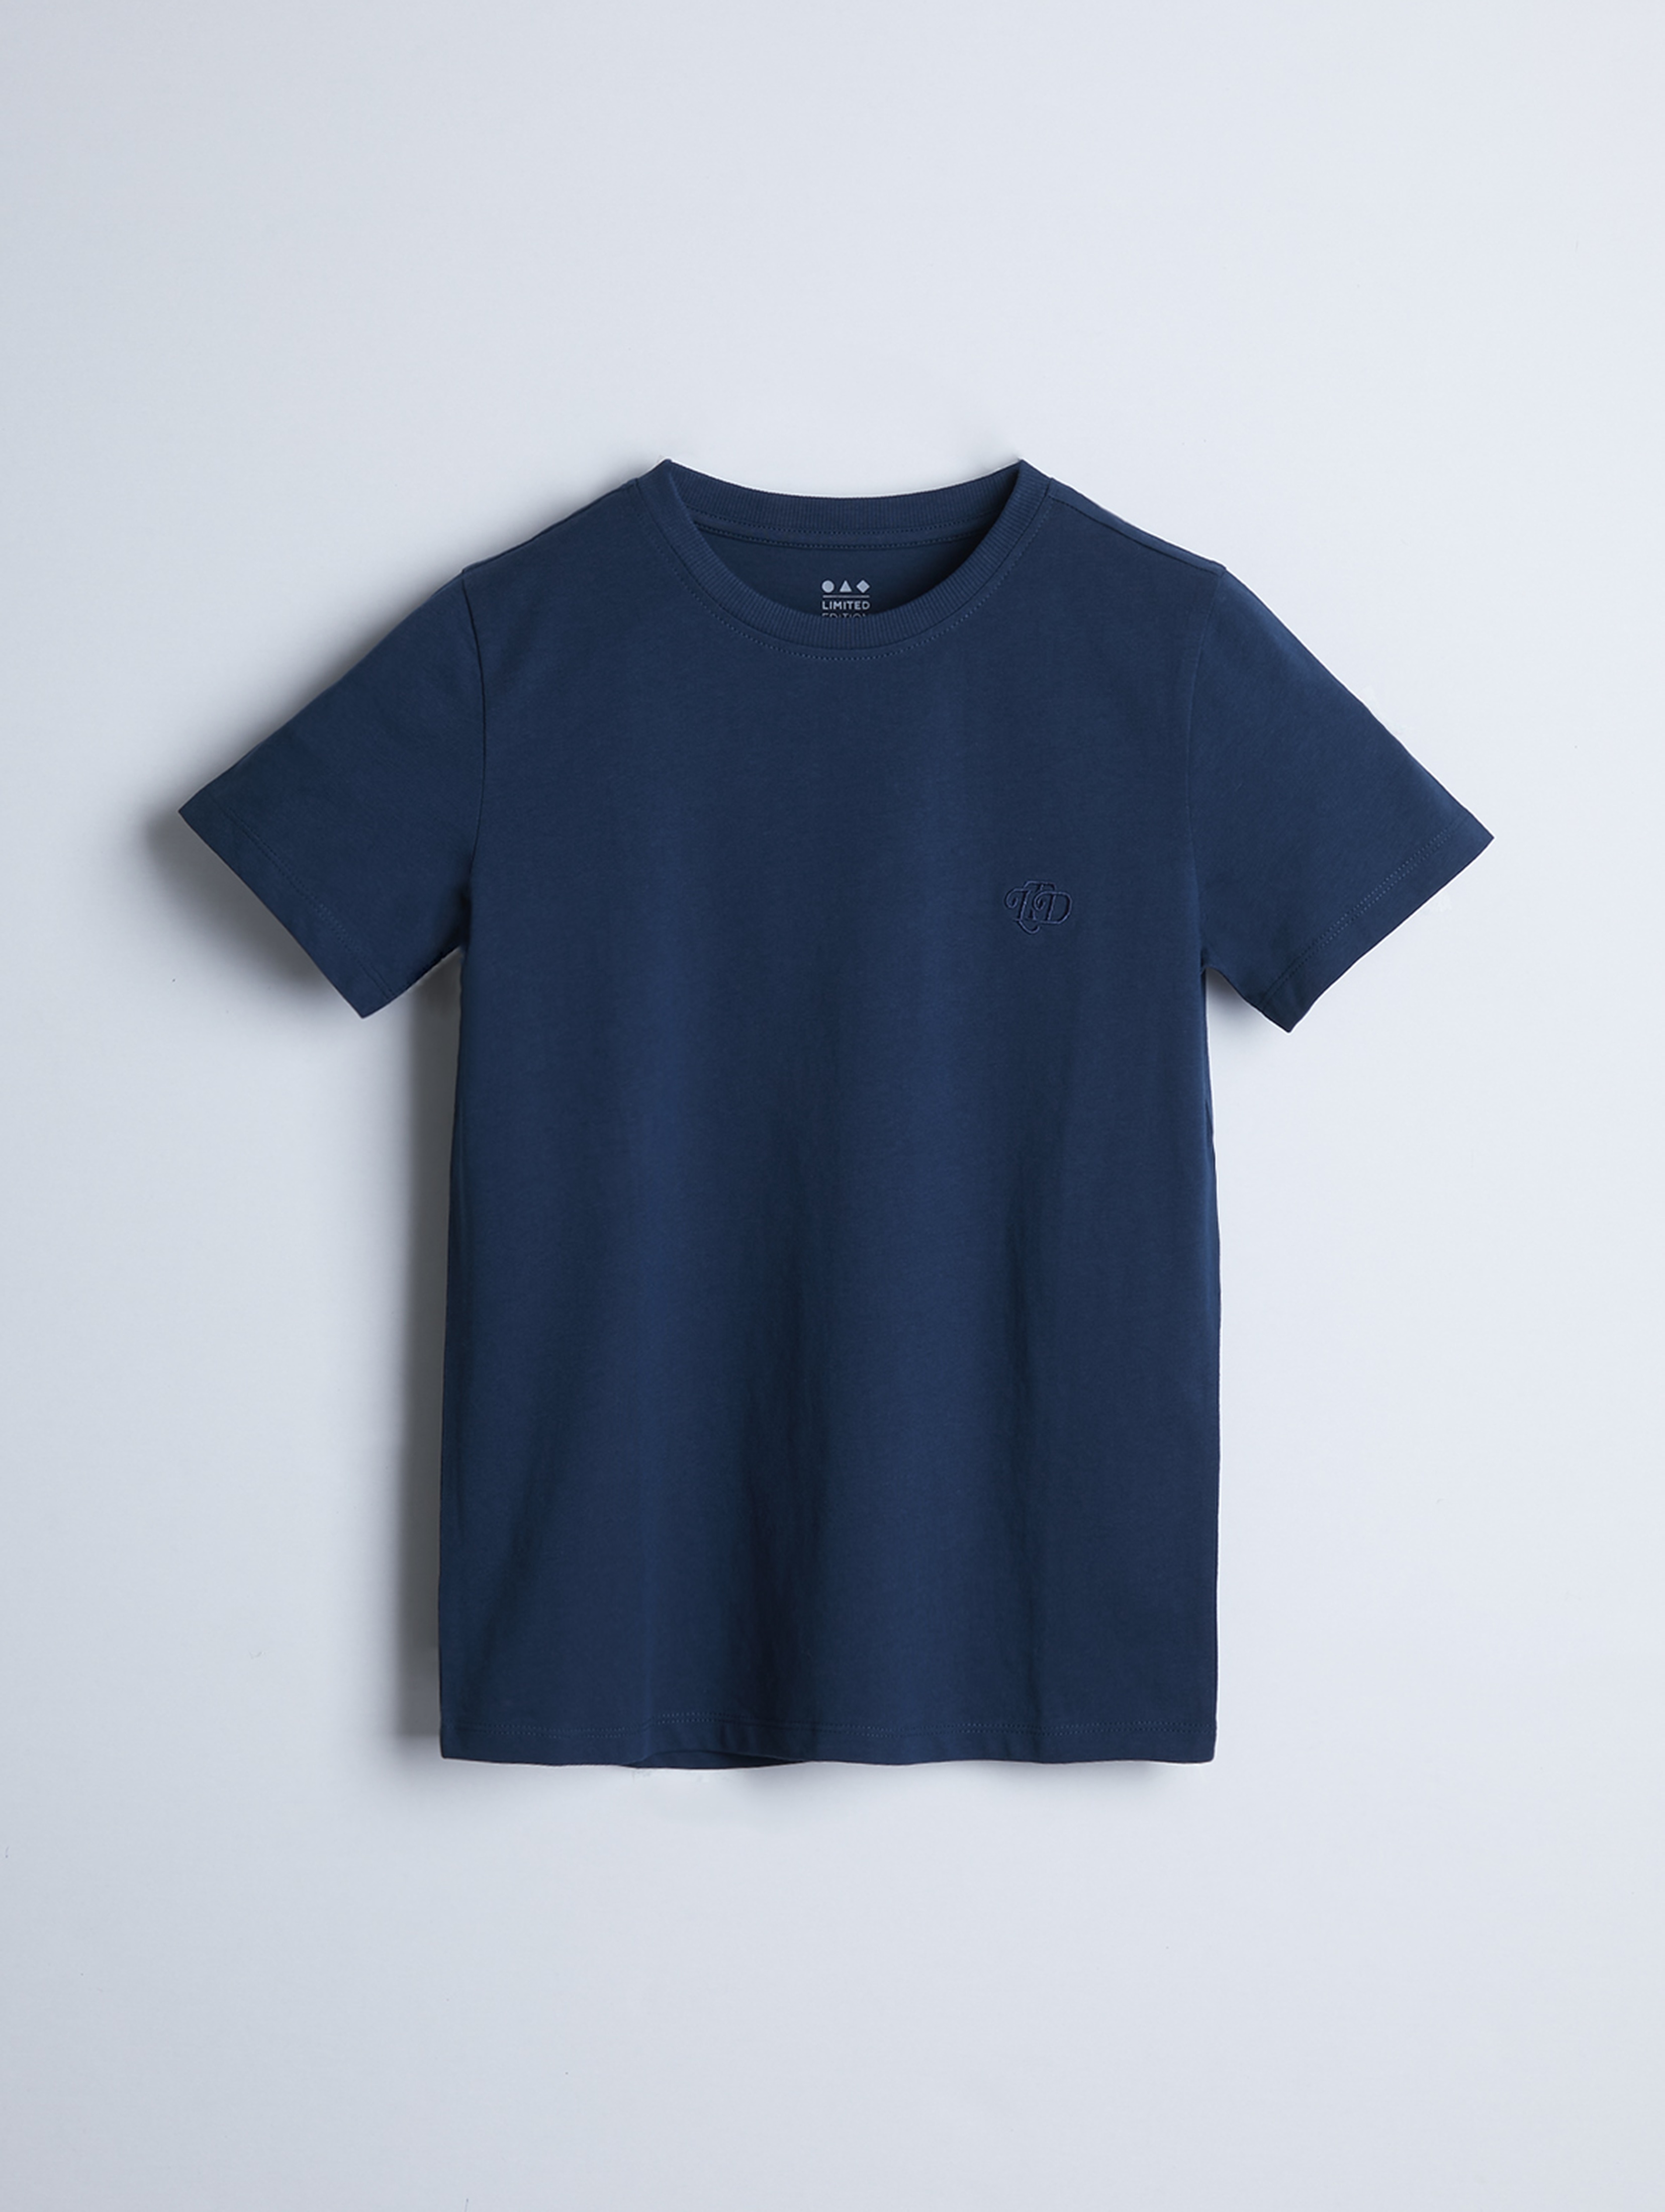 Bawełniany granatowy t-shirt dla dziecka - unisex - Limited Edition